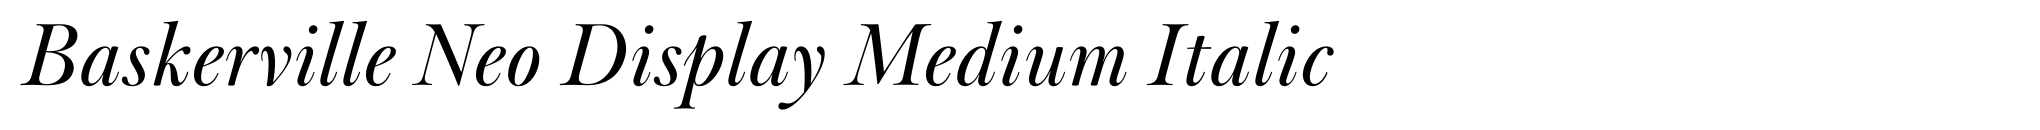 Baskerville Neo Display Medium Italic image